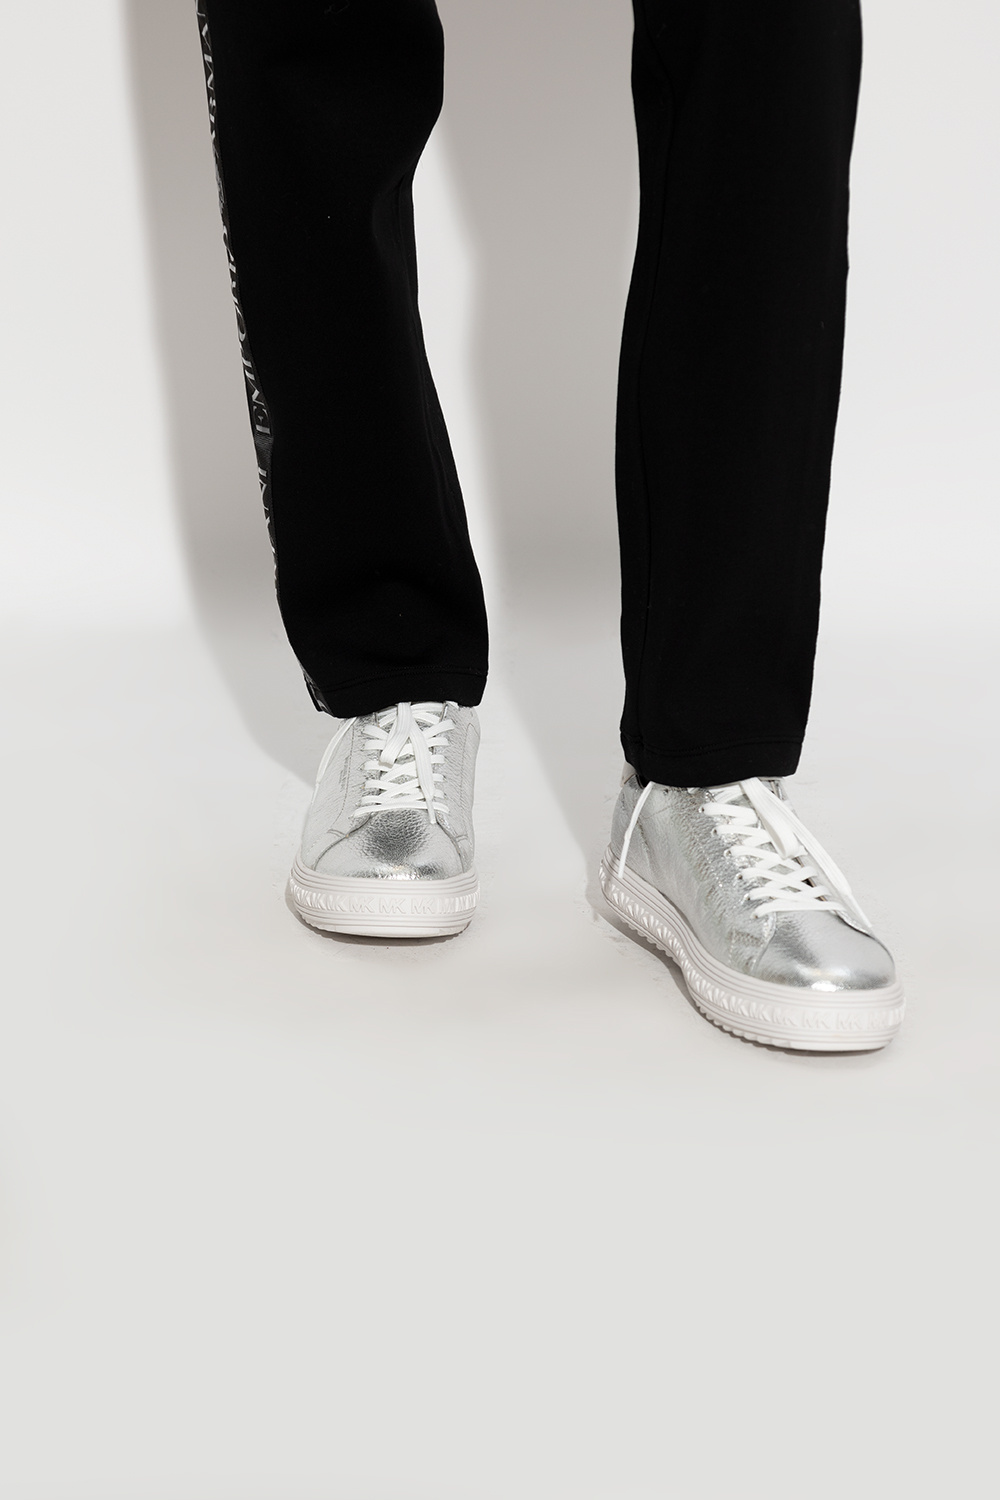 IetpShops | Women's Shoes | Michael Michael Kors 'Grove' sneakers | New  Balance 300 Indigo Pack Lifestyle Fashion Sneaker